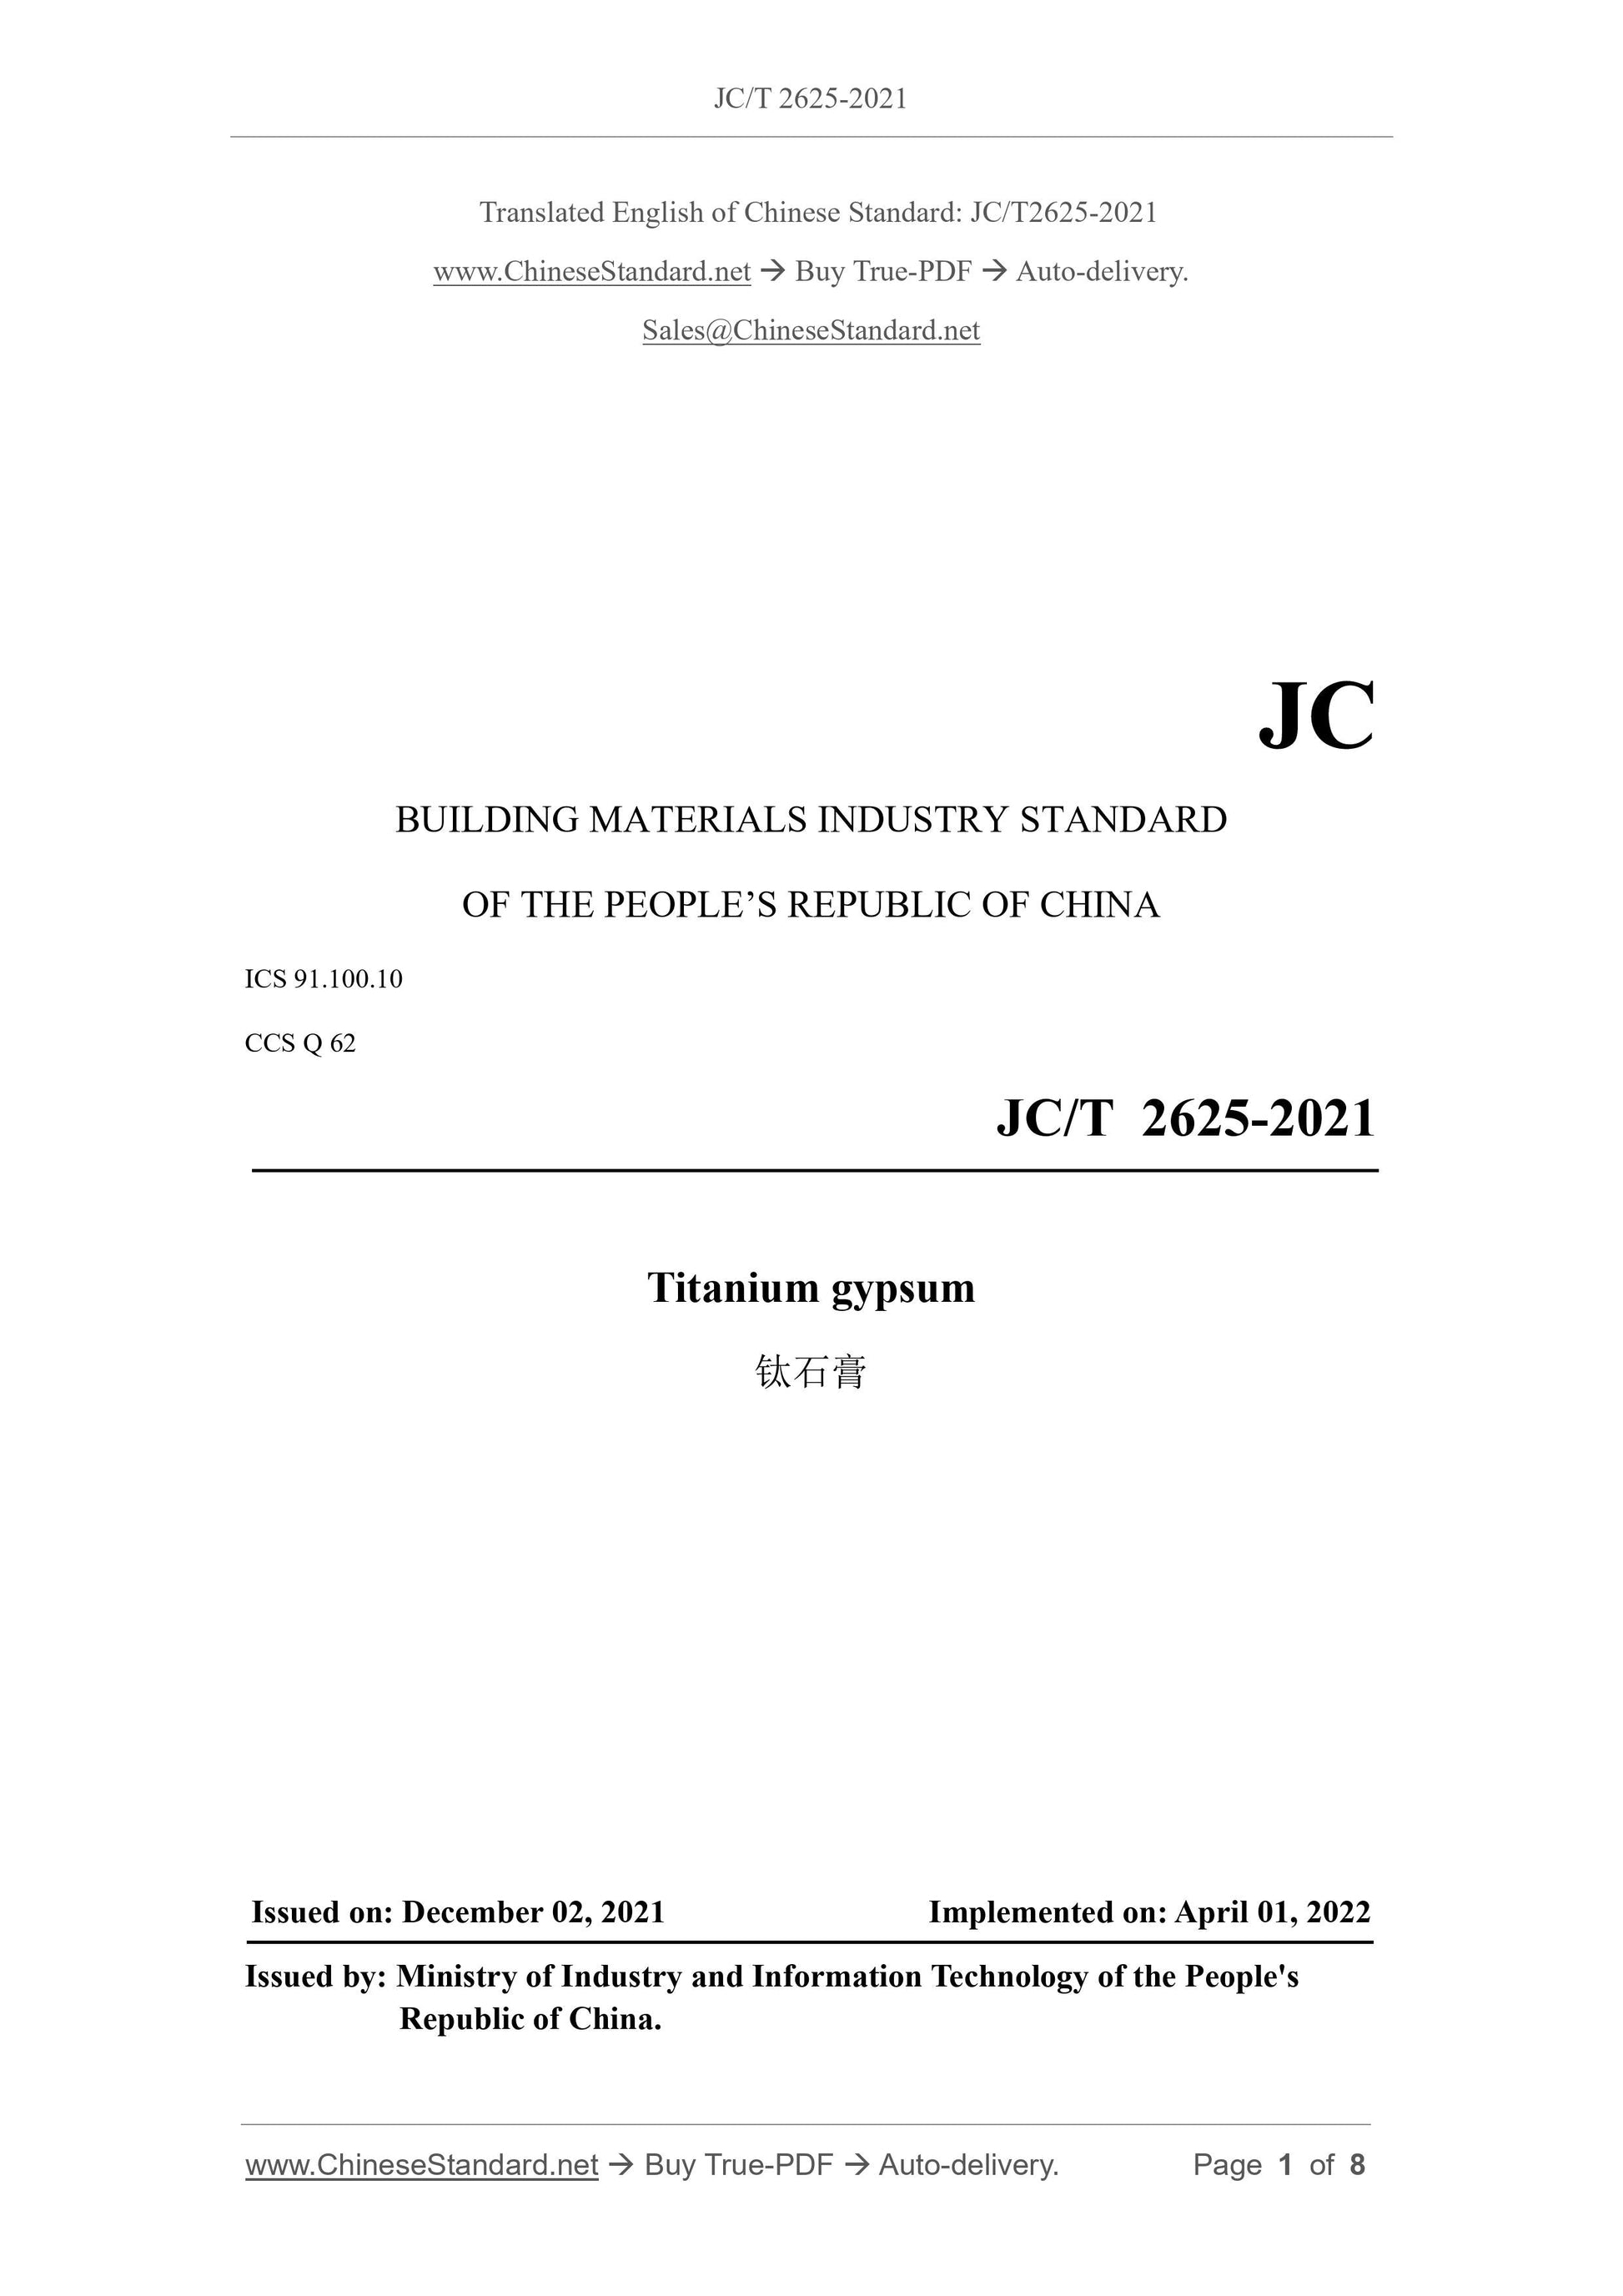 JC/T 2625-2021 Page 1